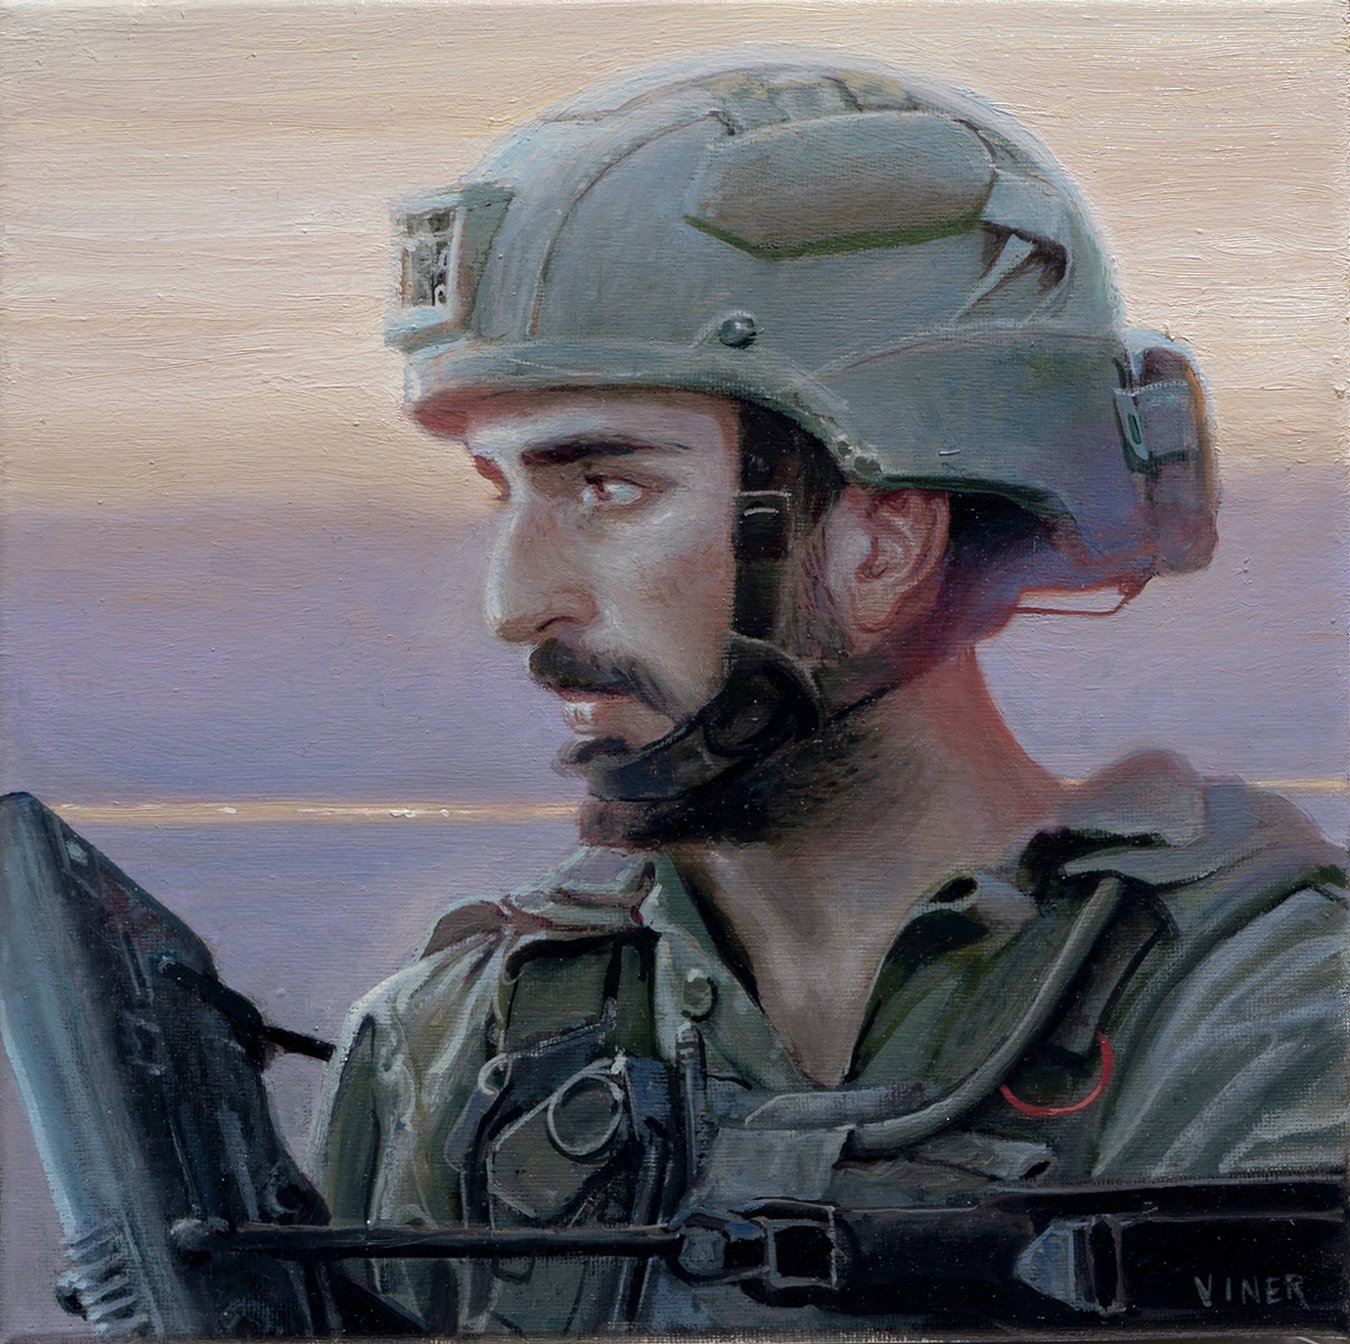 Israeli Soldier With Helmet